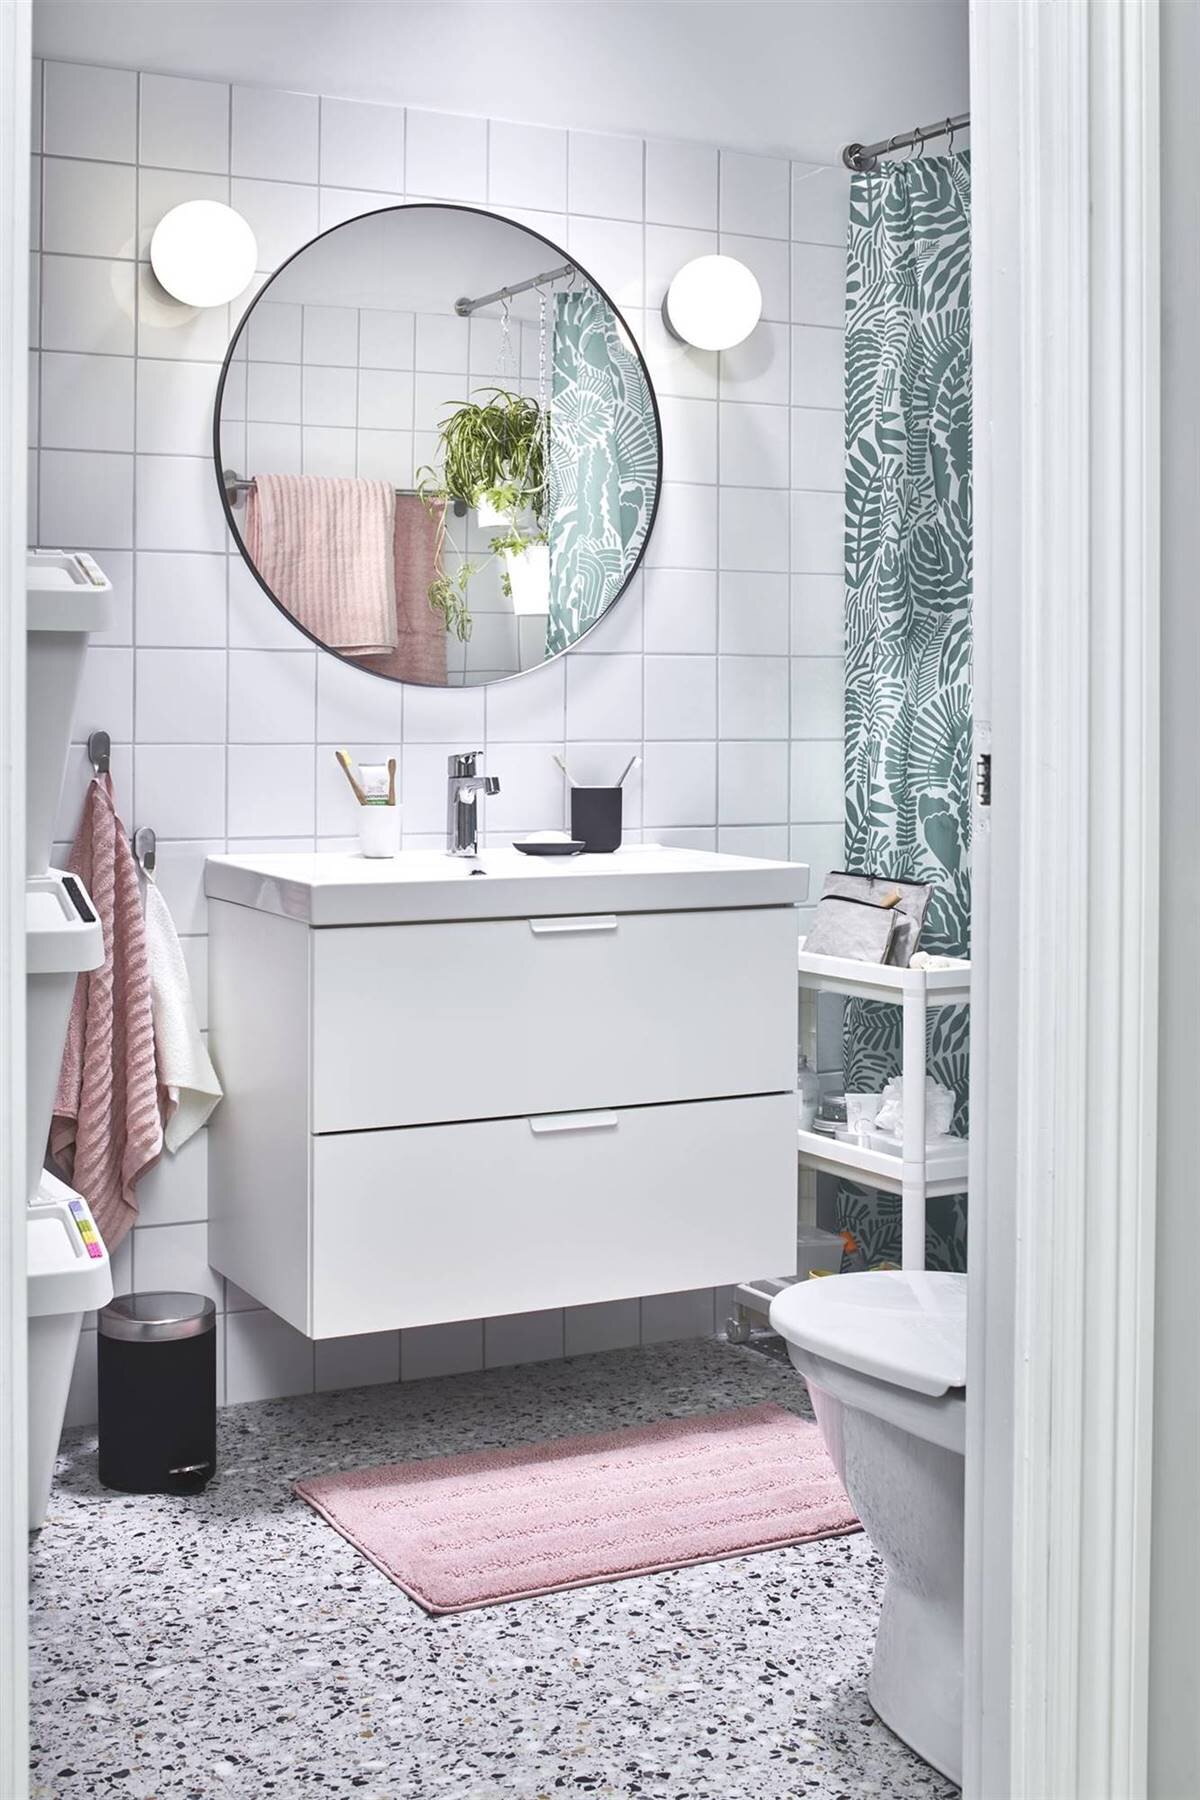 Calm Bathrooms From Ikea 2021 Catalogue, Ikea Bathroom Design Ideas